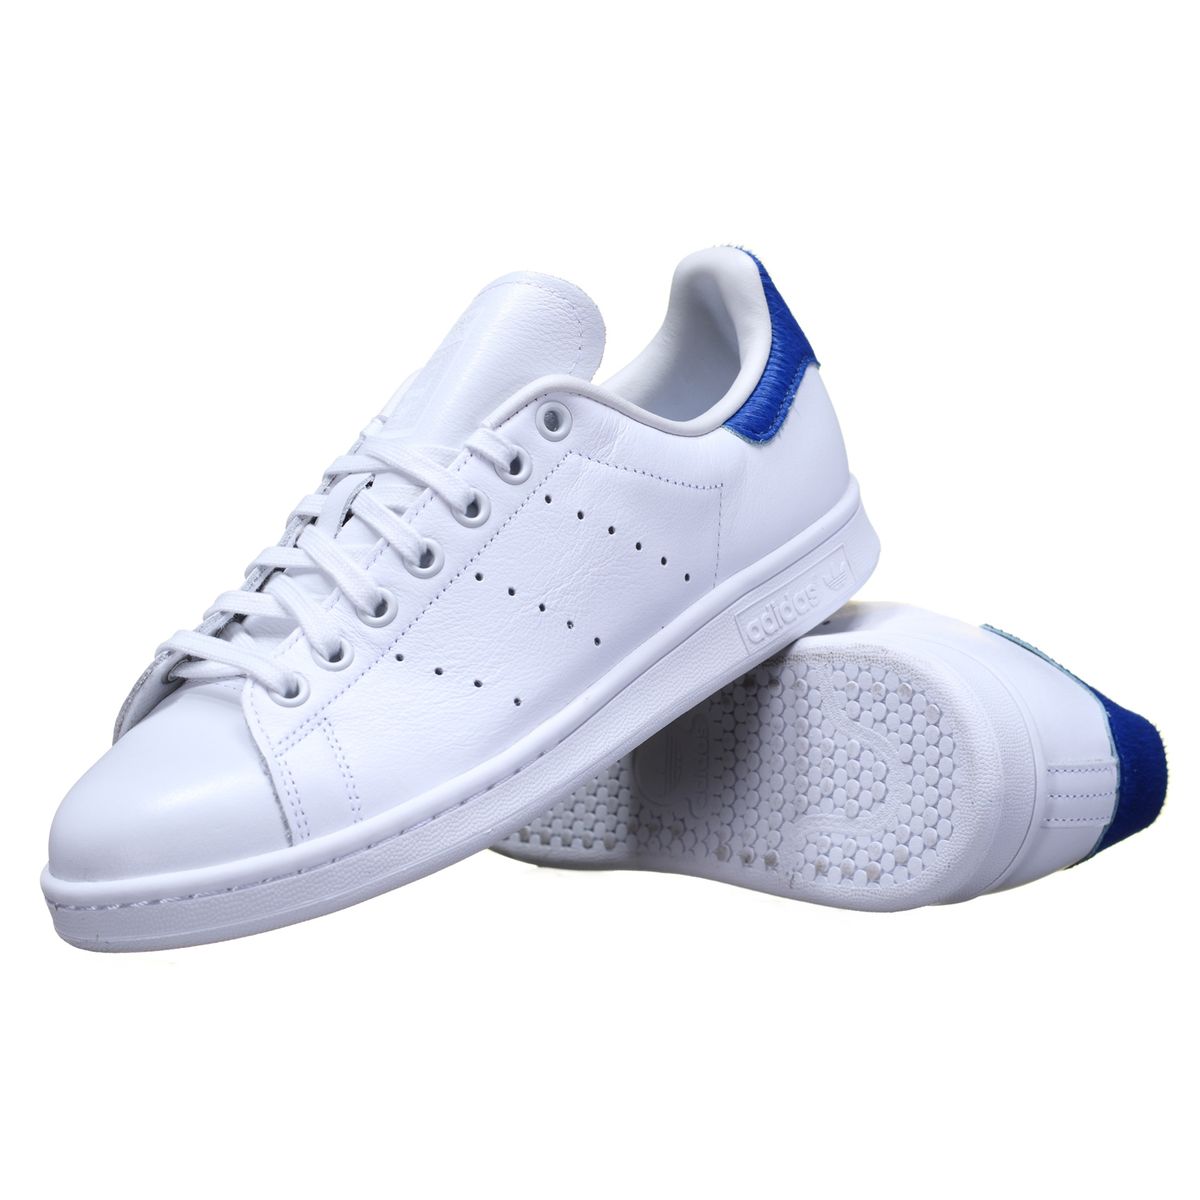 Chaussure adidas stan smith s75559 blanc/bleu Adidas